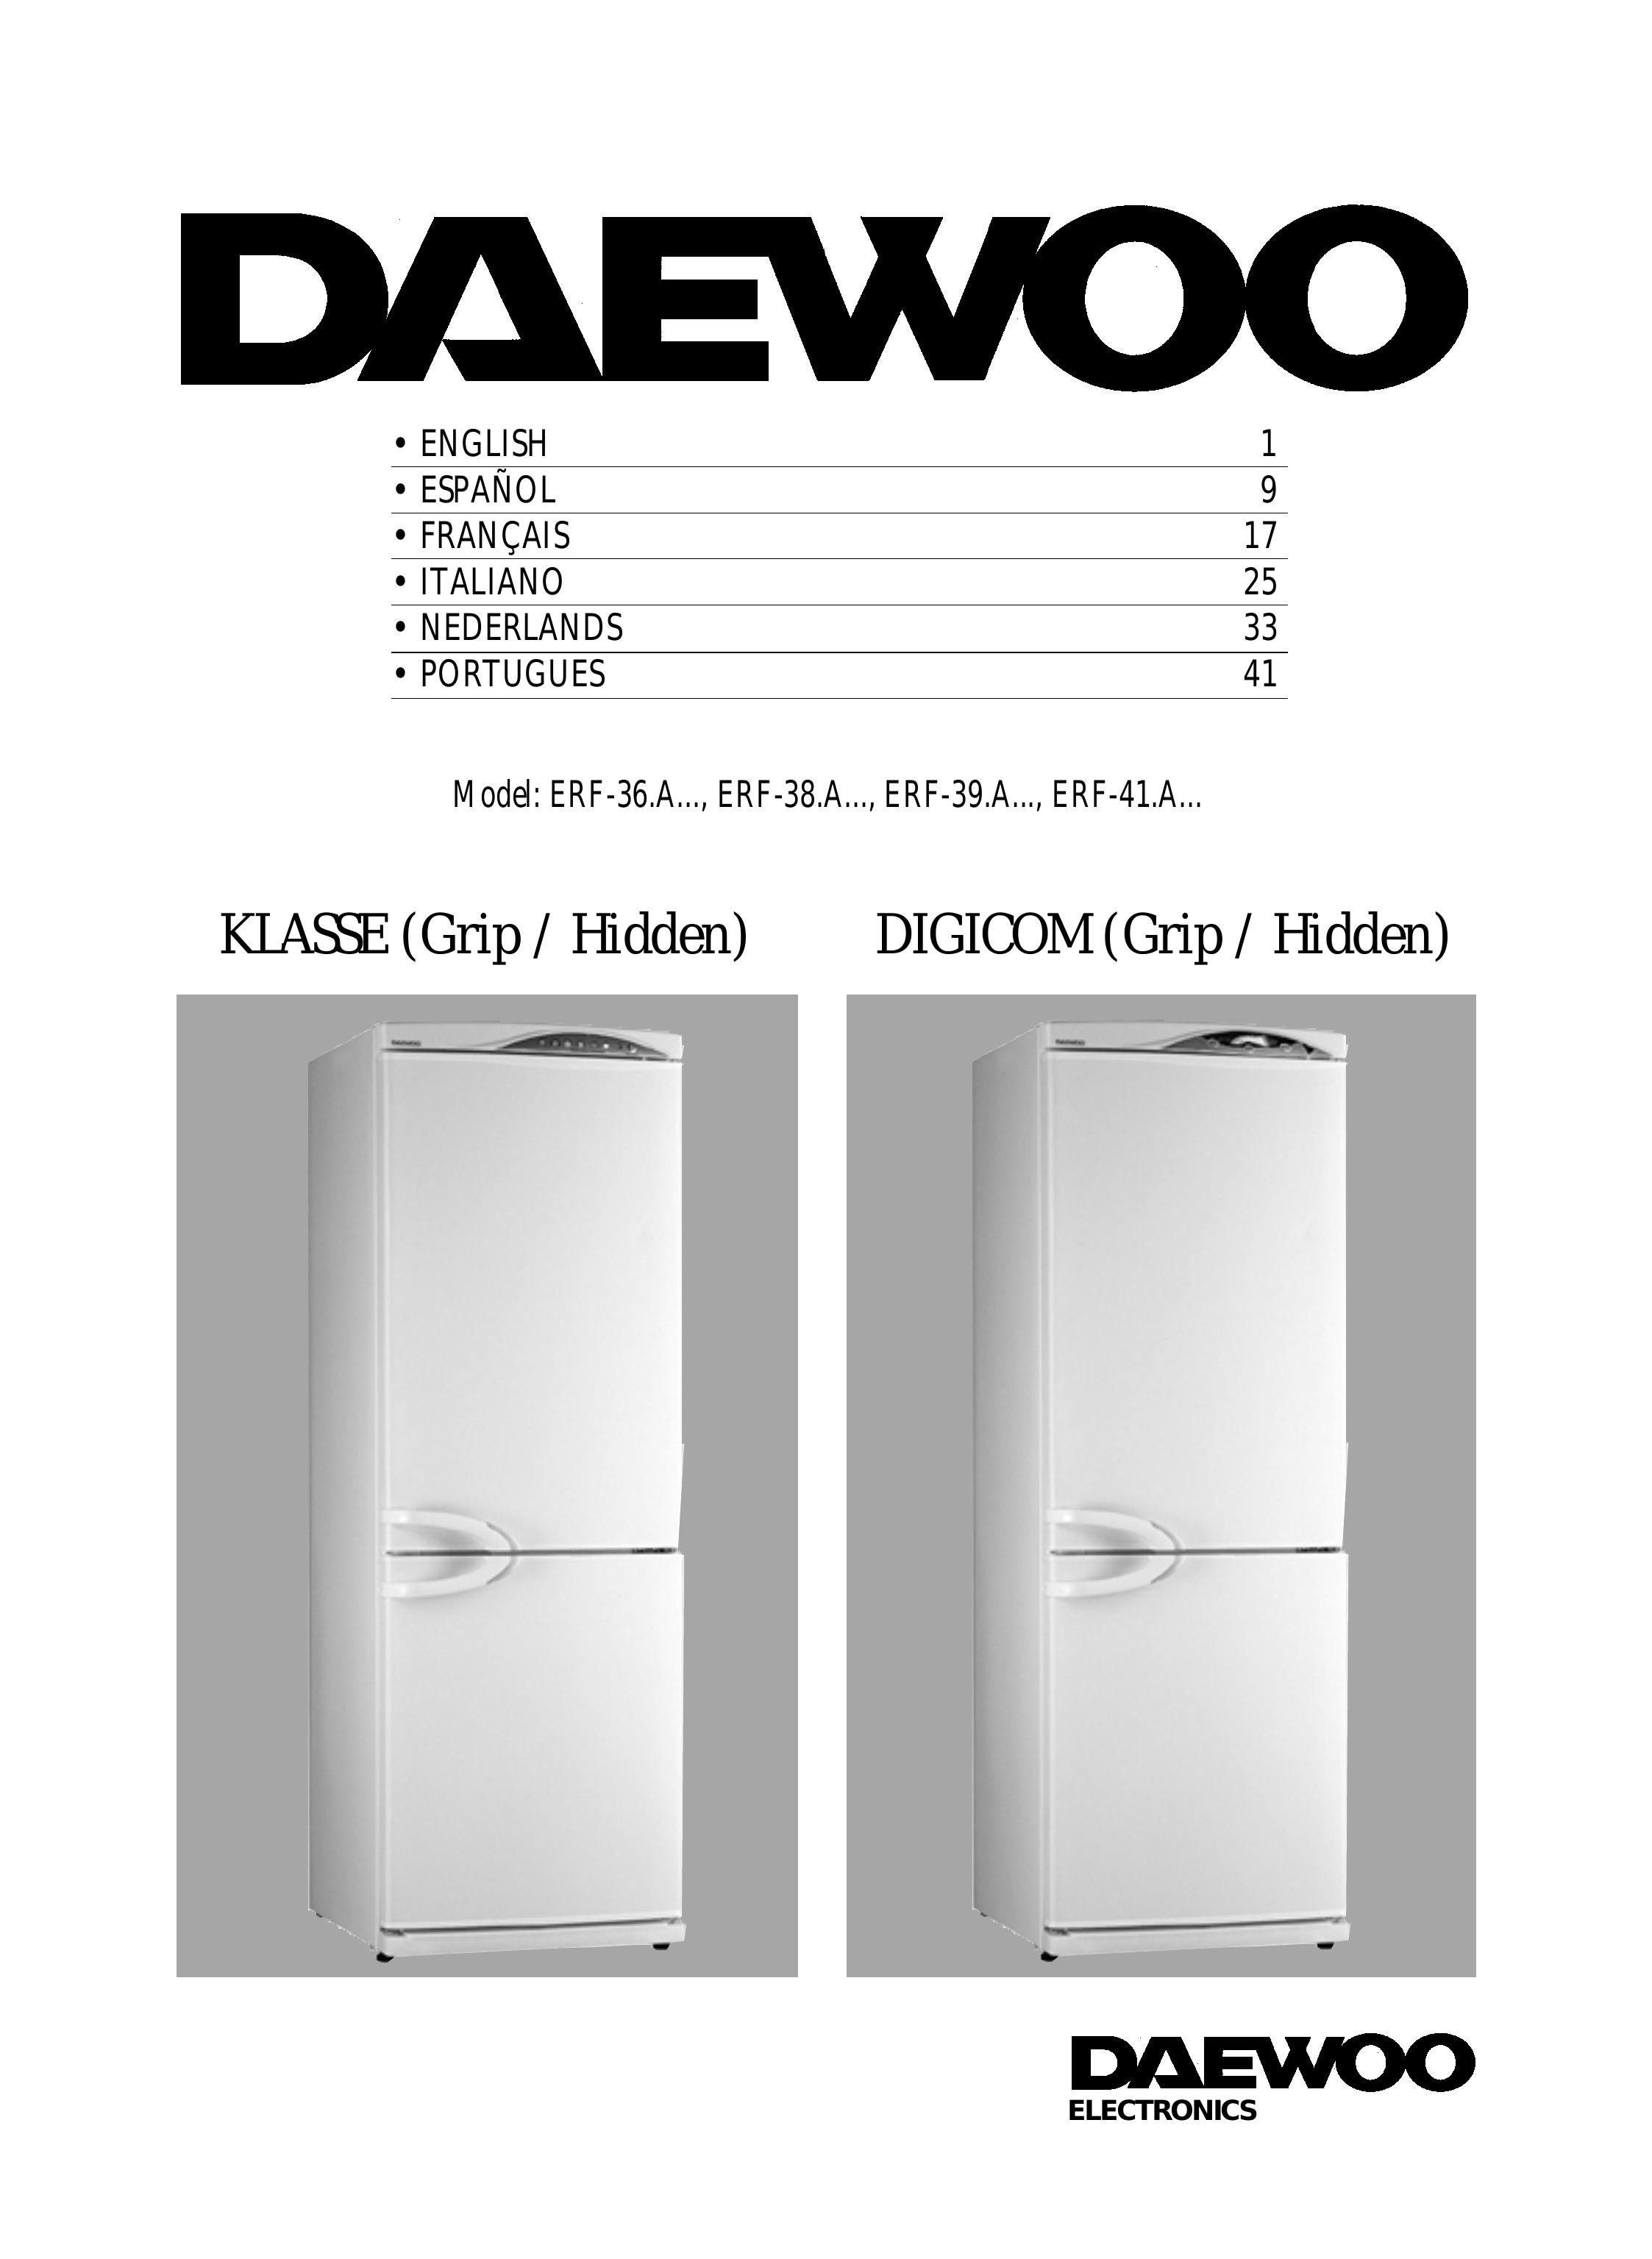 Daewoo ERF-41.A Refrigerator User Manual